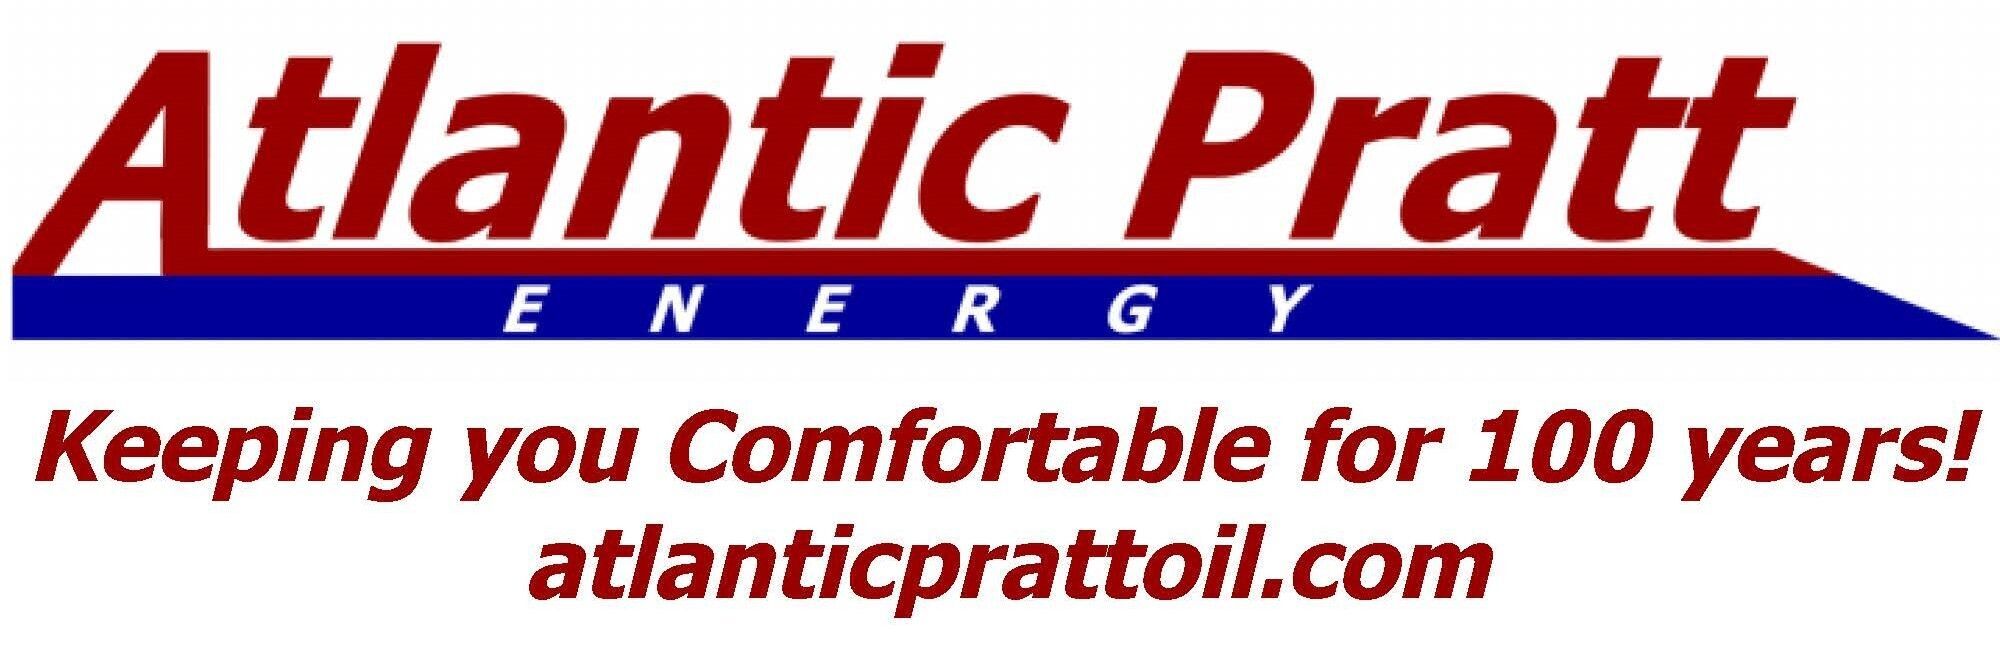 Atlantic-Pratt Oil Company